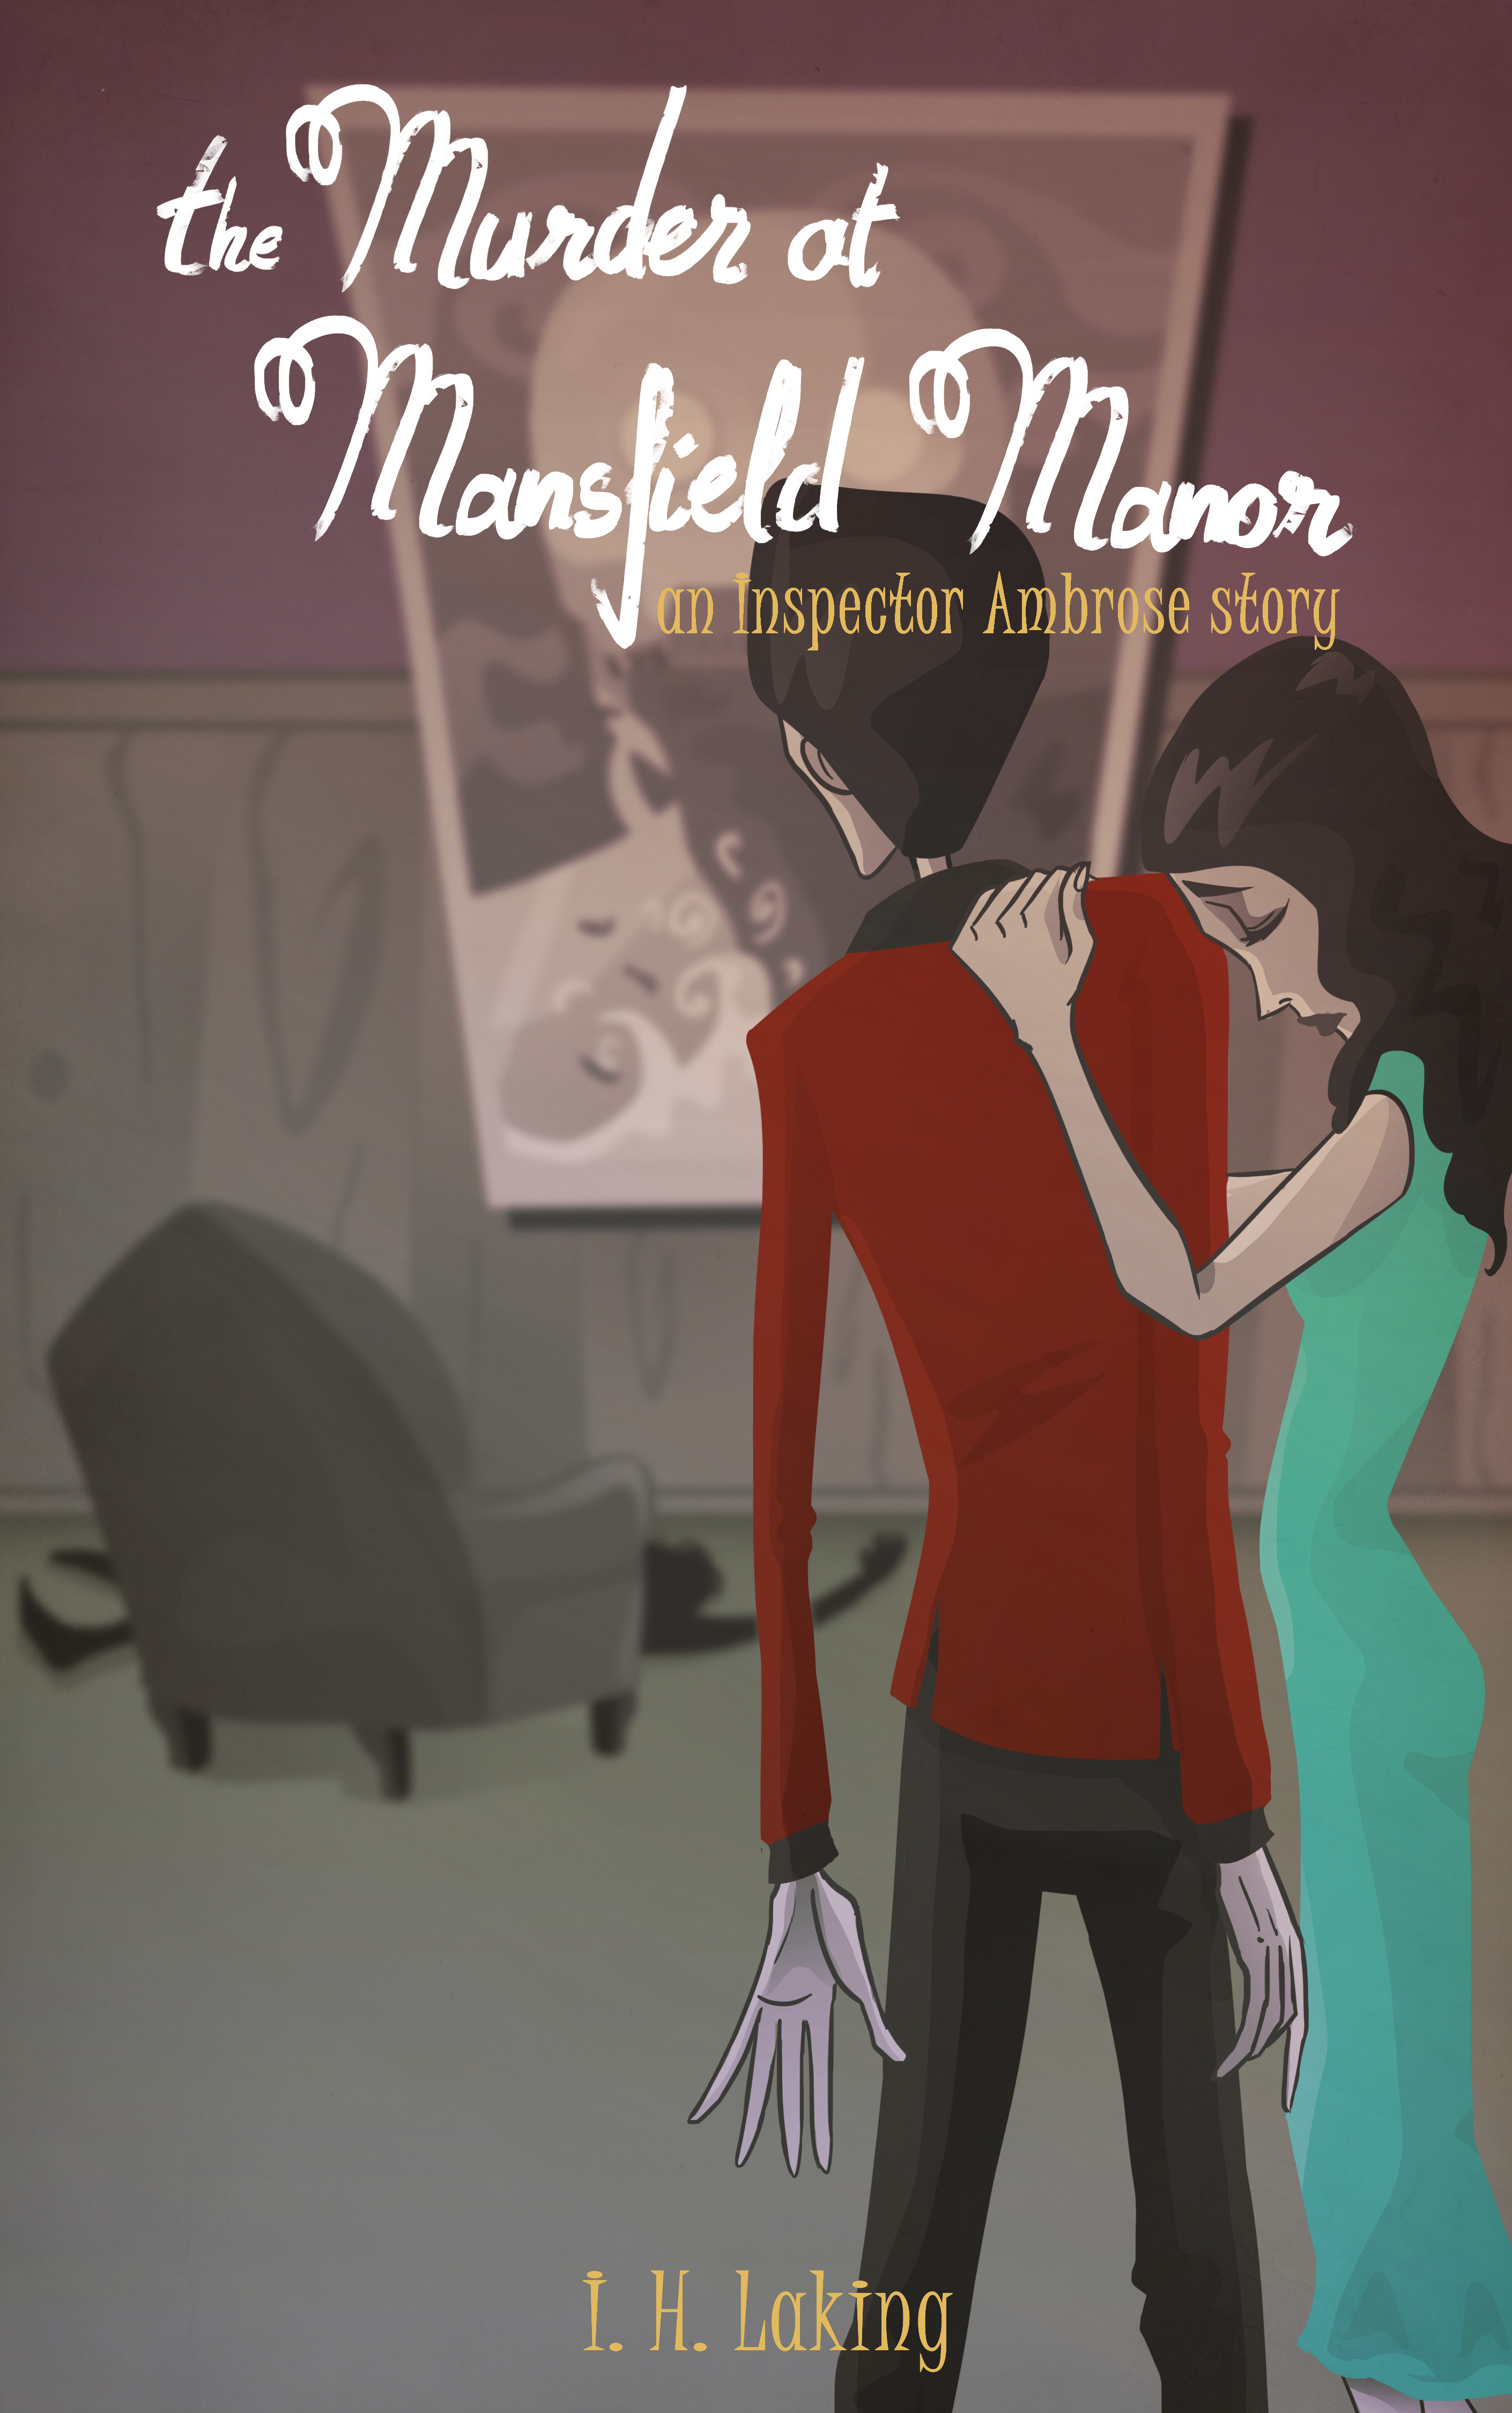 Cover Art for the Murder at Mansfield Manor by Blacksmiley via ArtCorgi